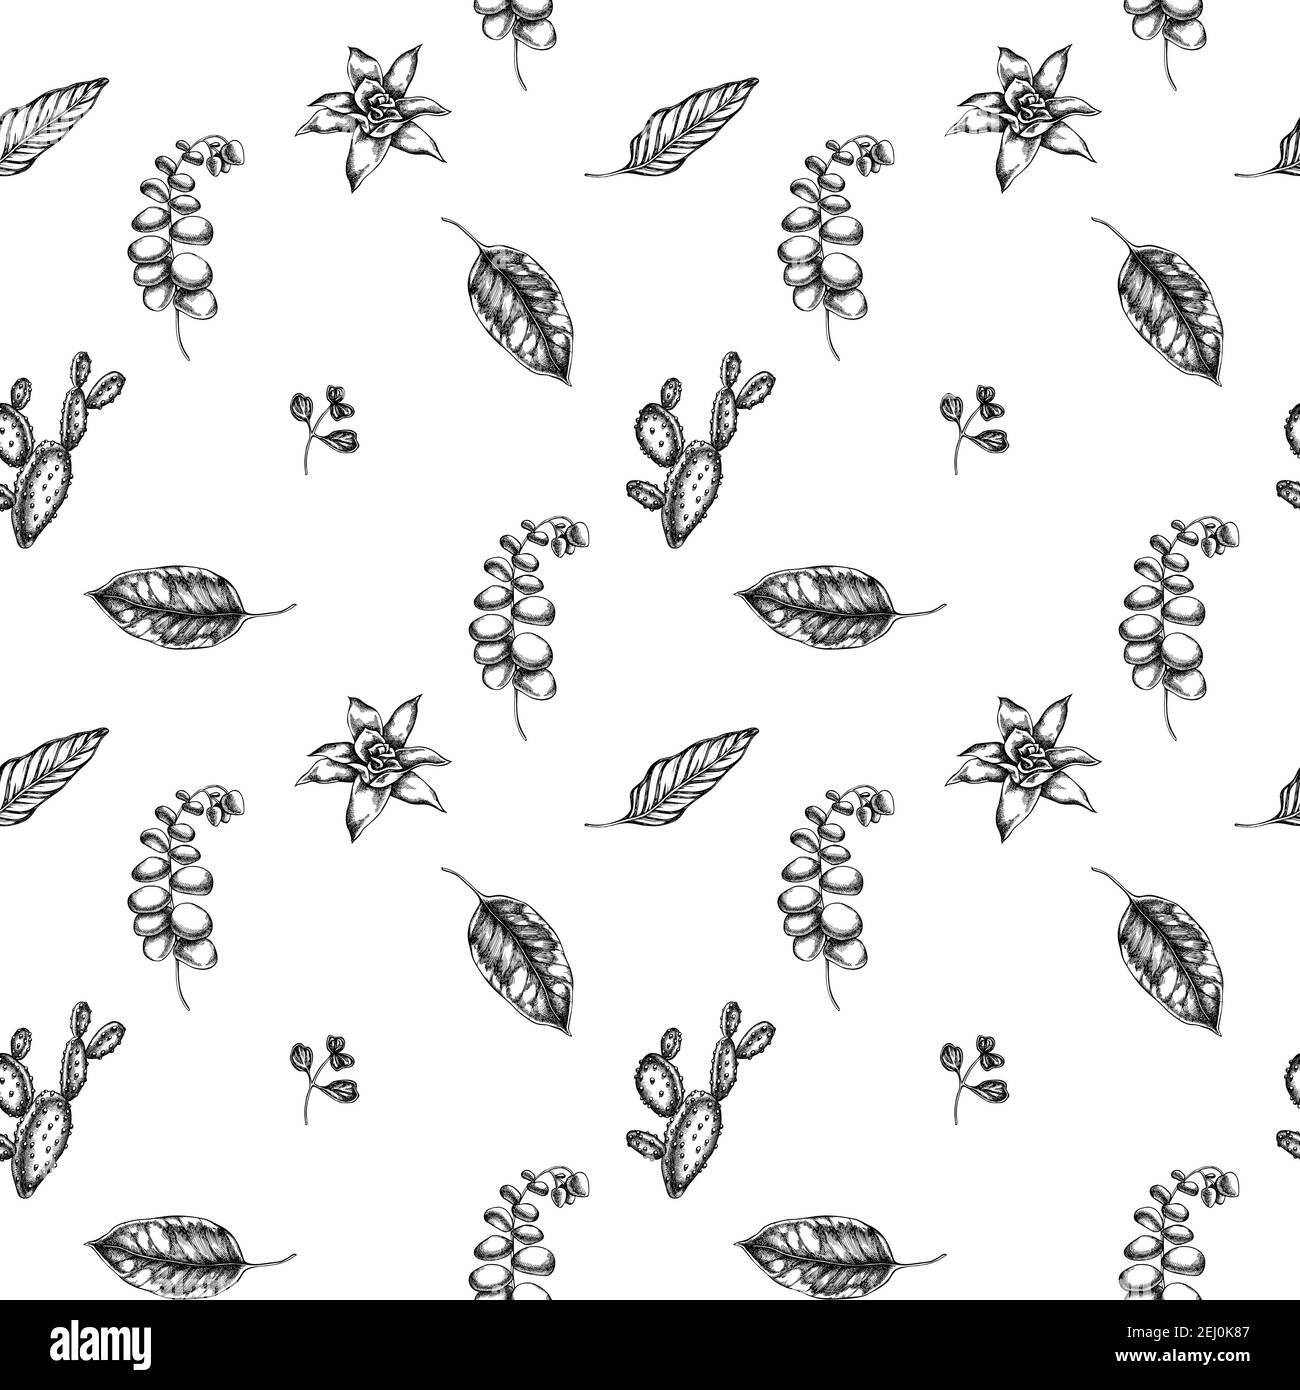 Seamless pattern with black and white ficus, iresine, kalanchoe, calathea, guzmania, cactus Stock Vector